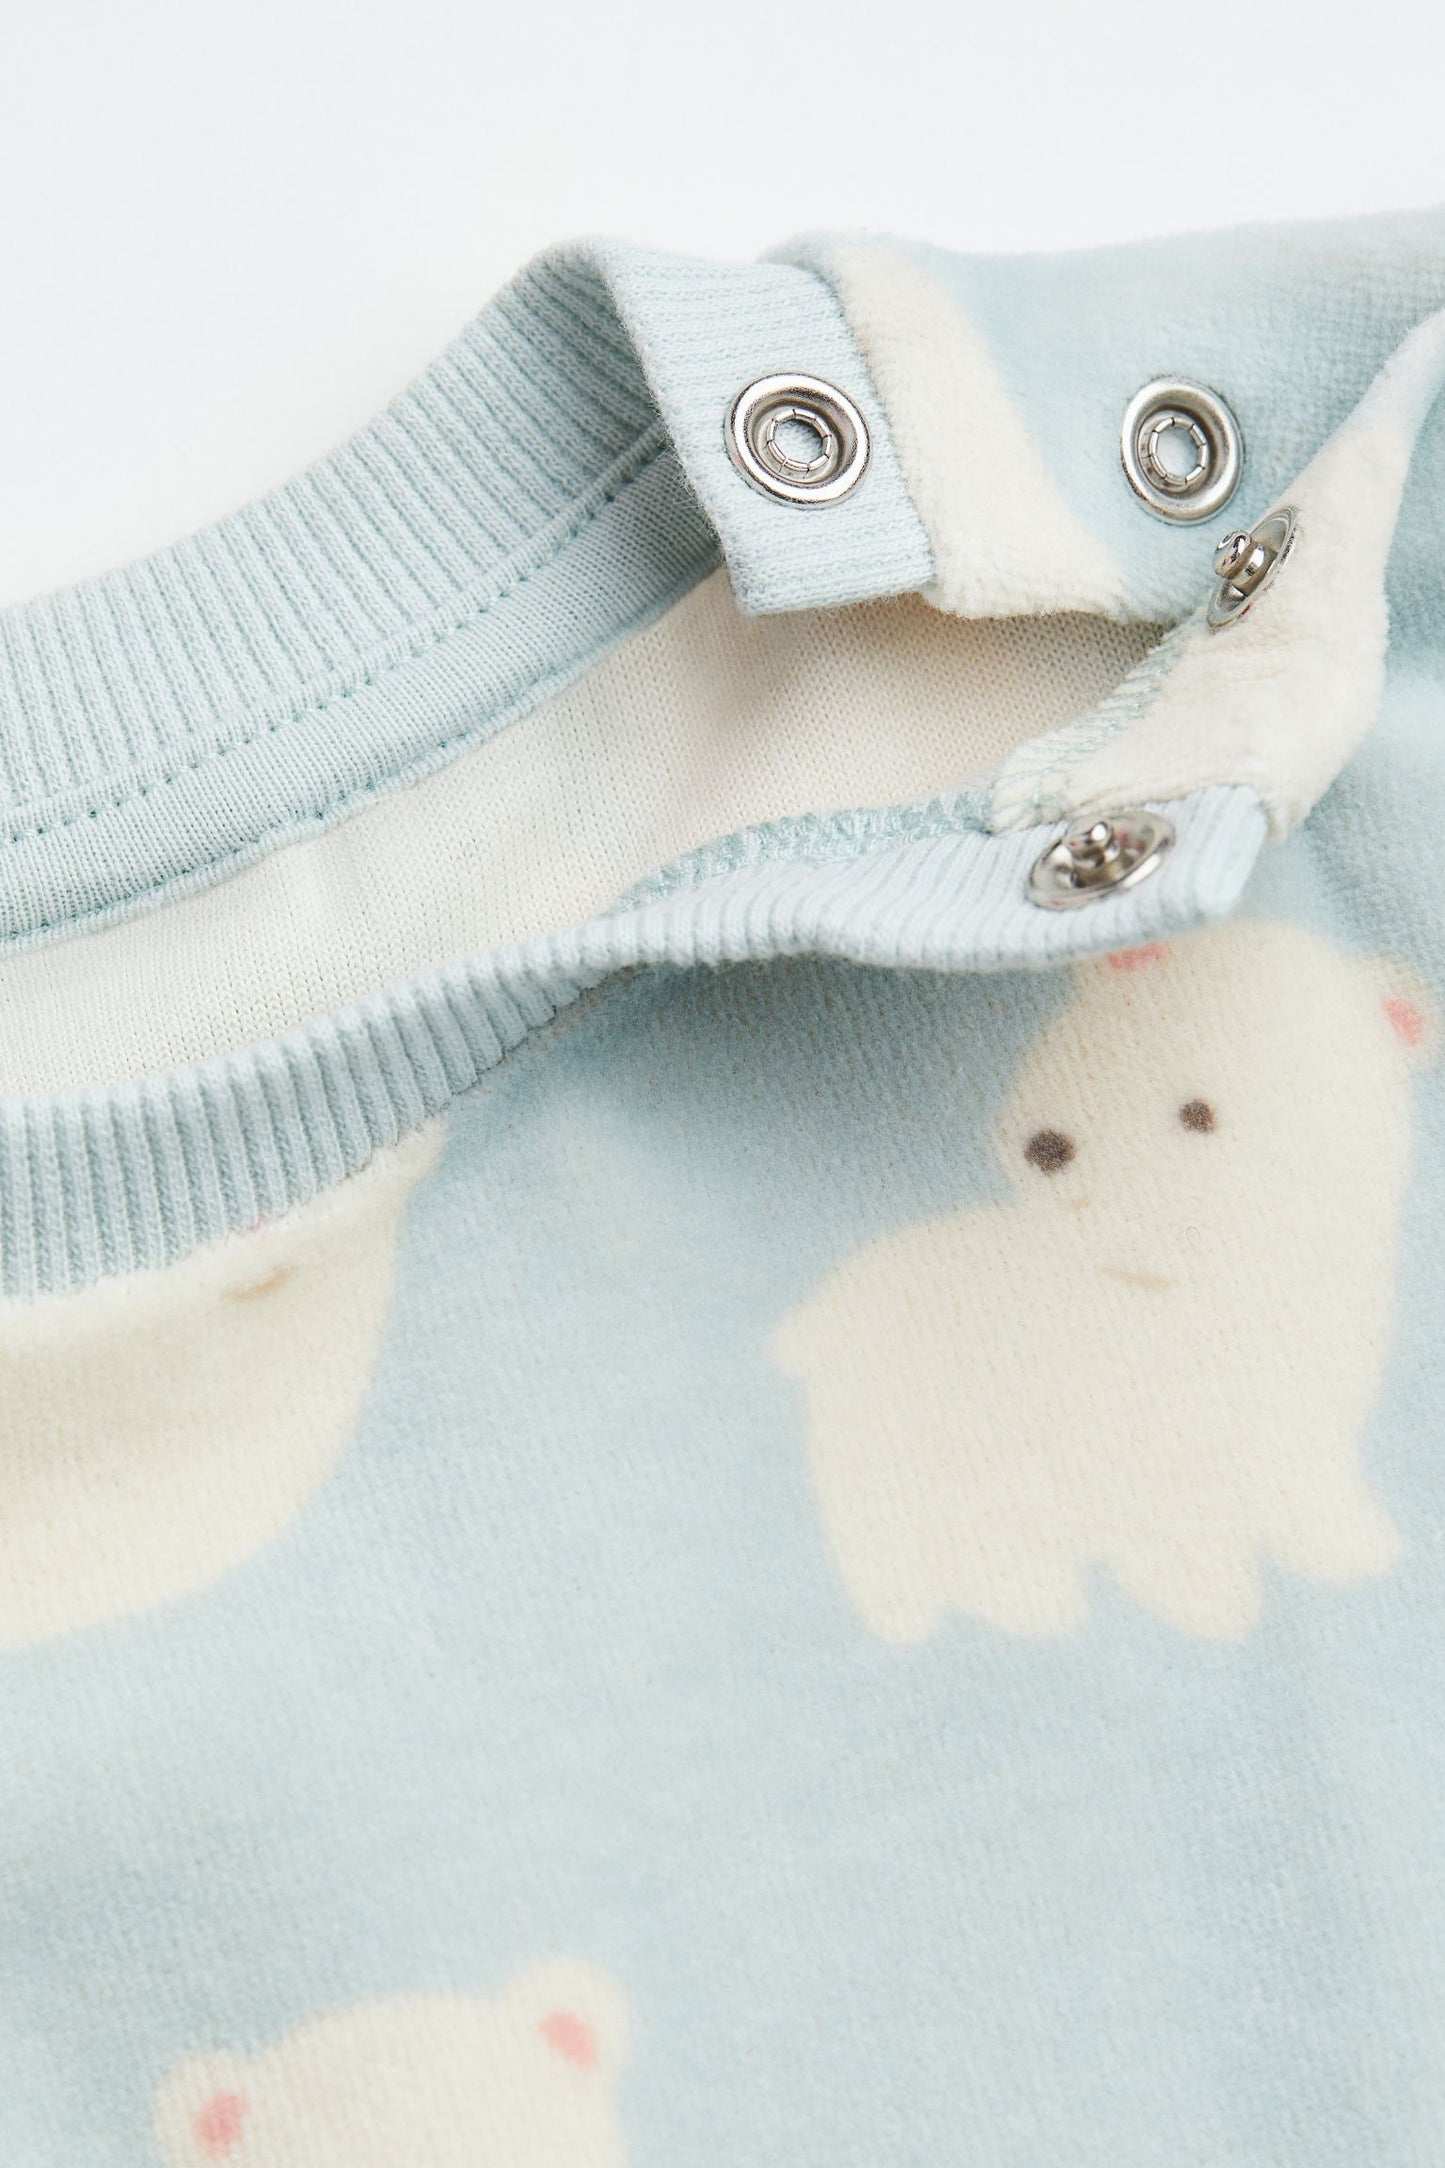 Polar bears Velour pyjamas